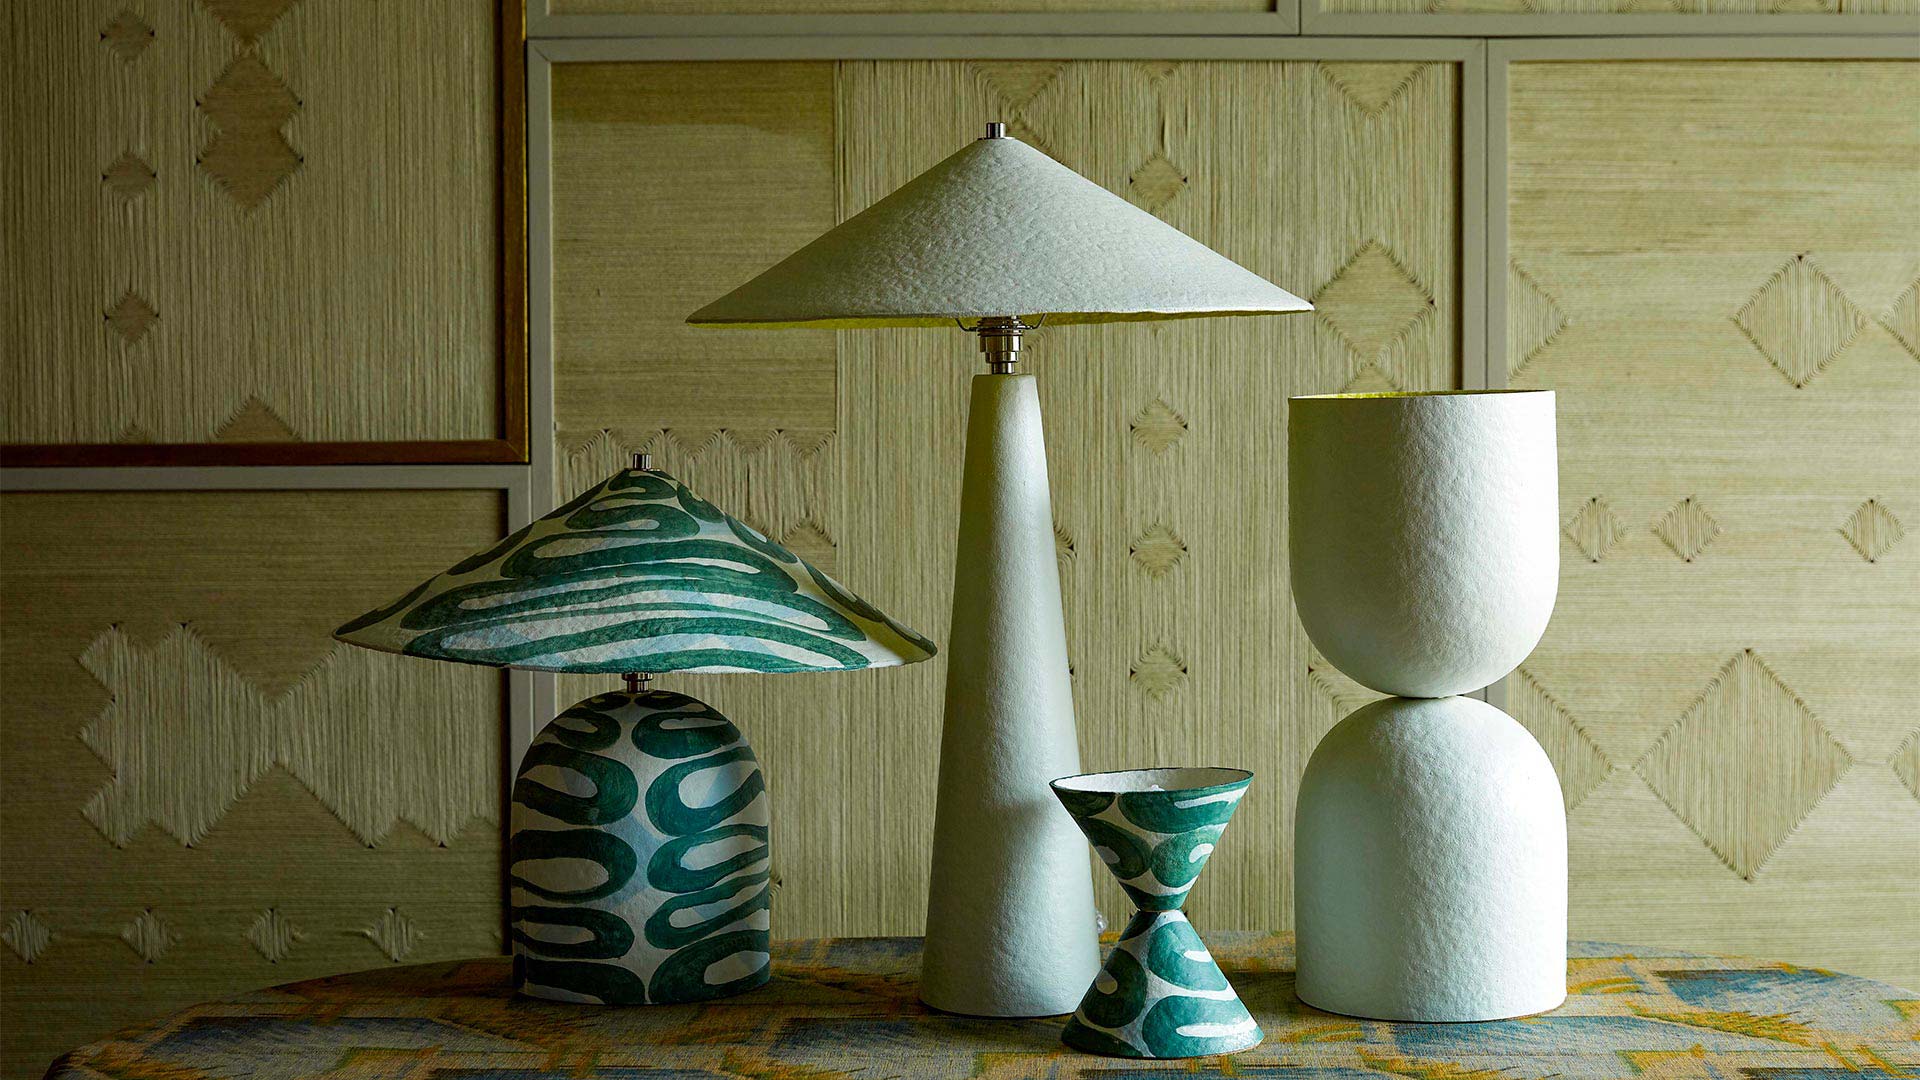 Figurative Papier-Mâché Lamp Sculptures Illuminate a Room with